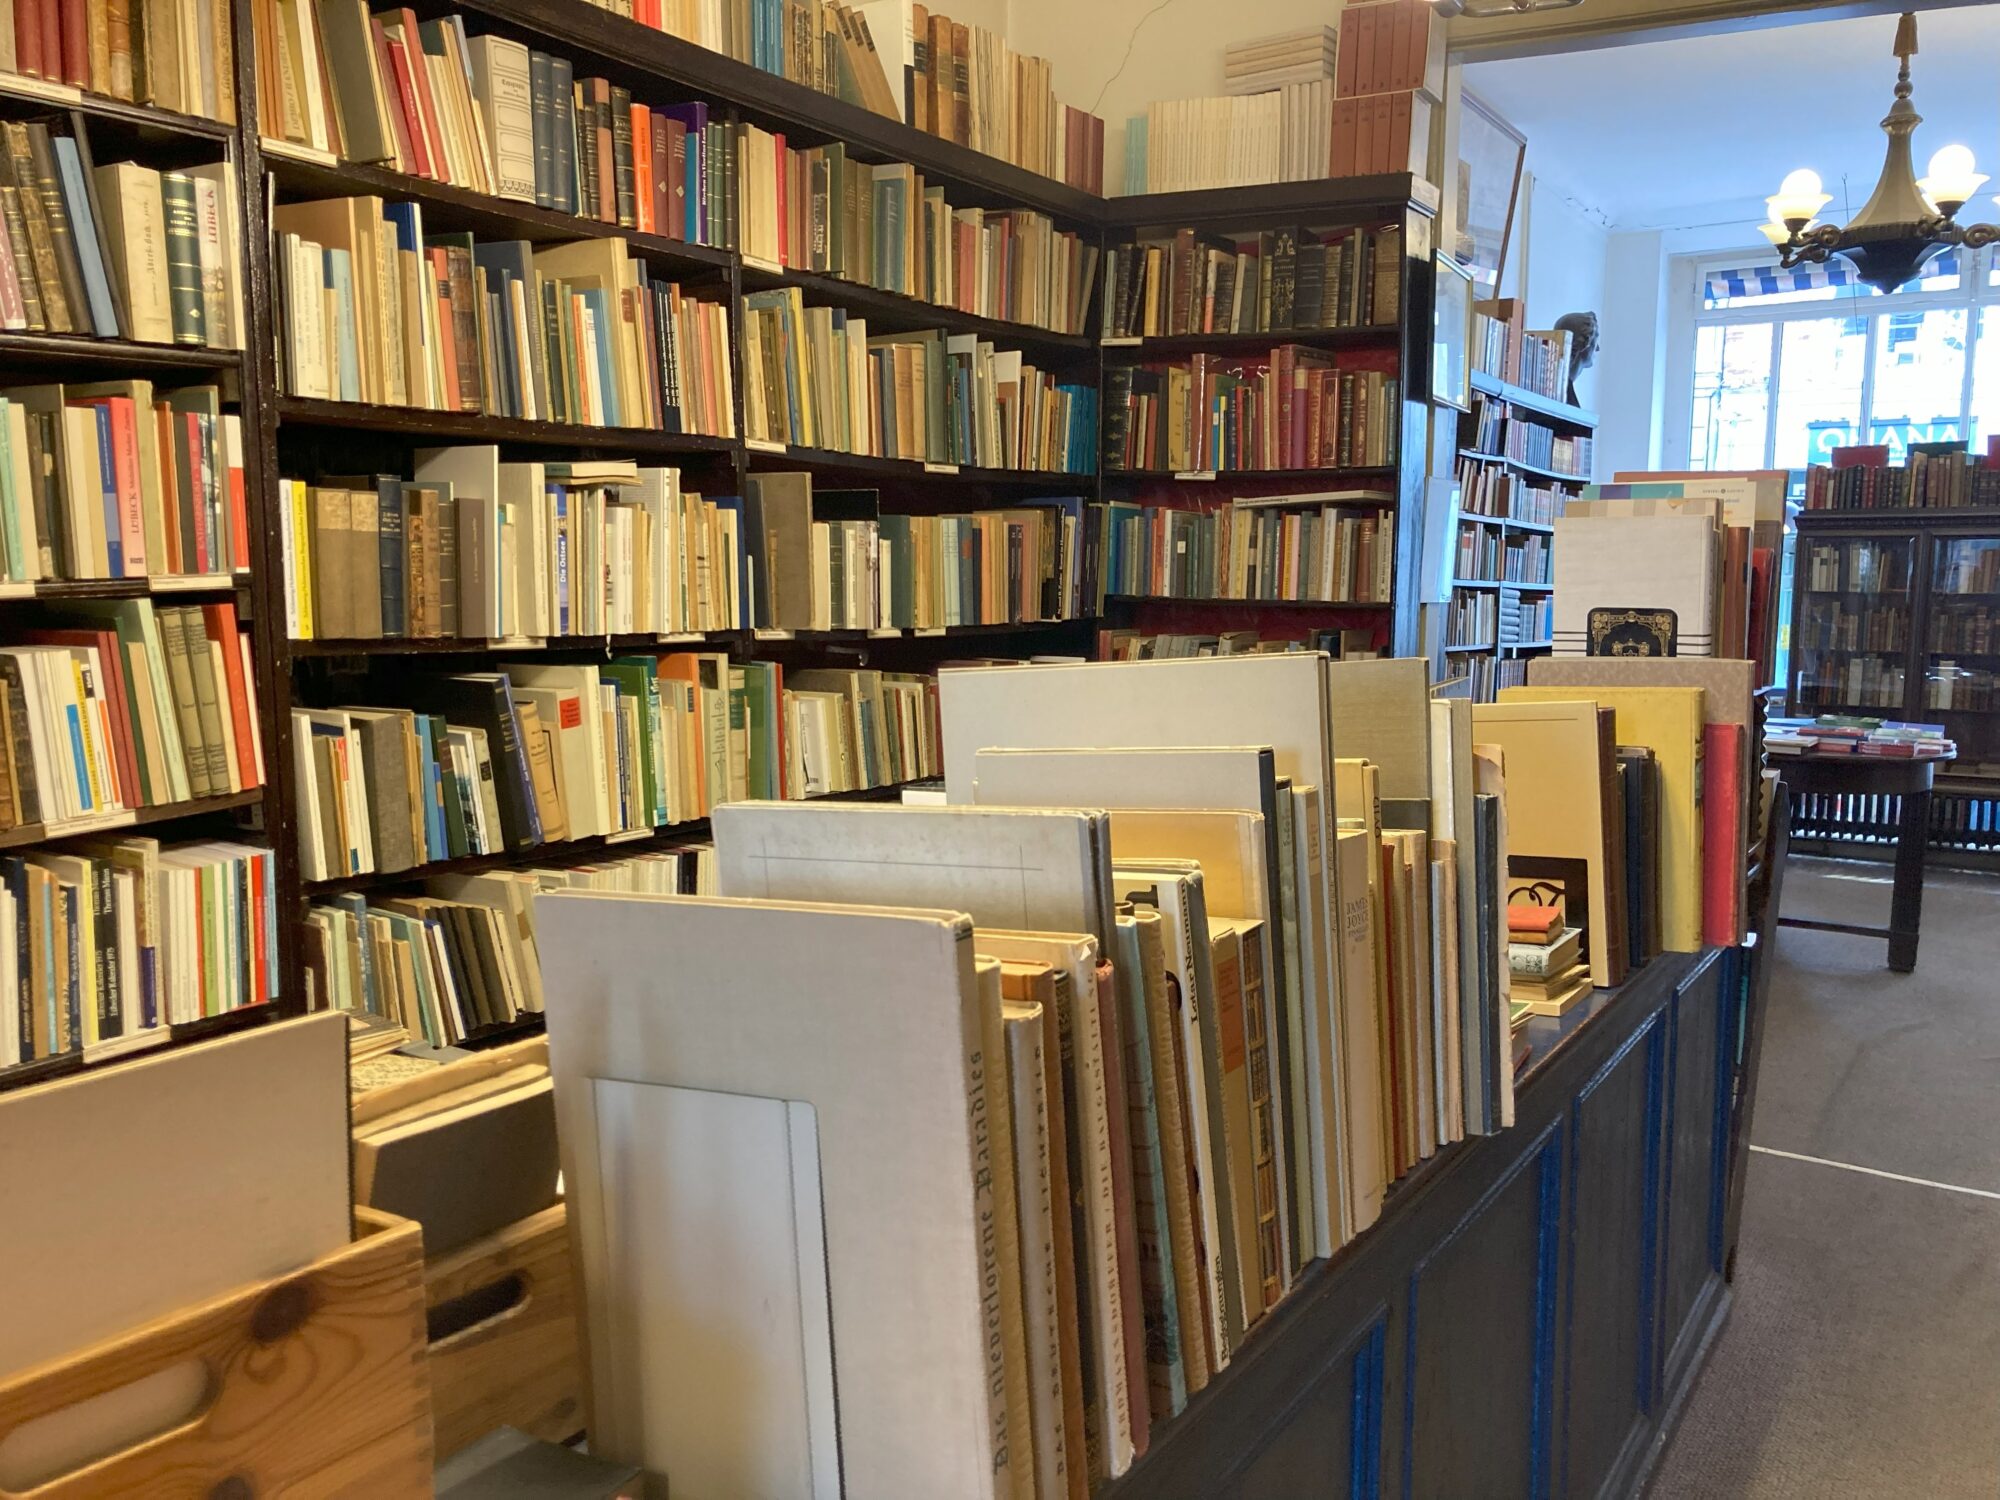 Arno Adler - the bookshop and antiquarian bookshop in Lübeck